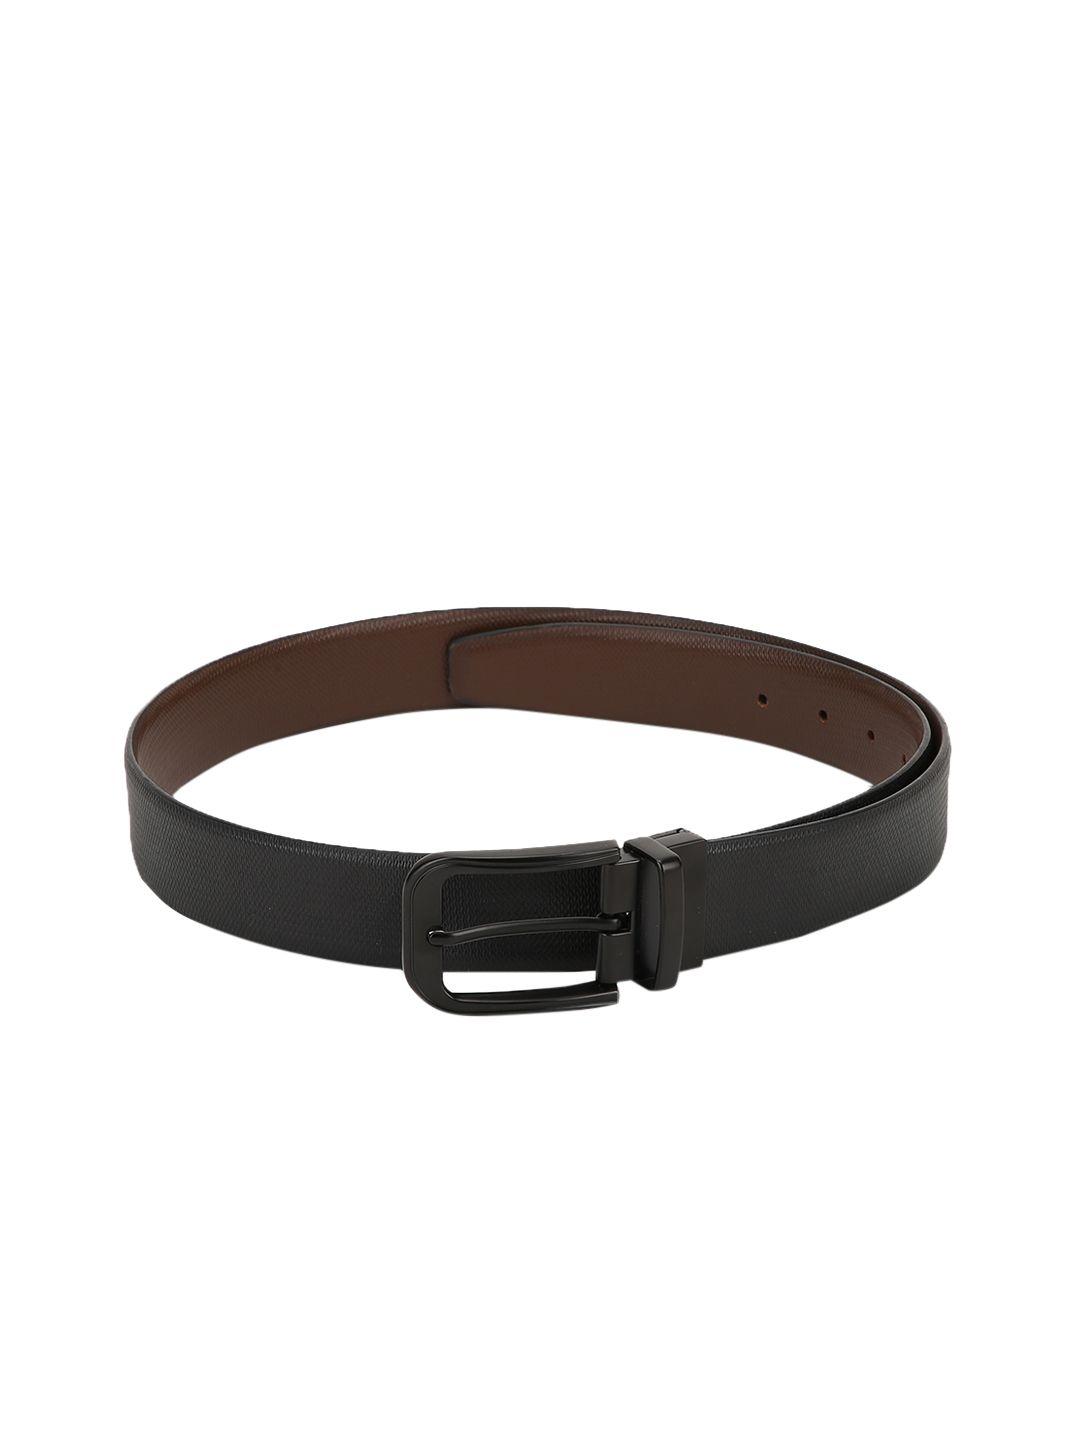 teakwood leathers men black & brown leather reversible belt